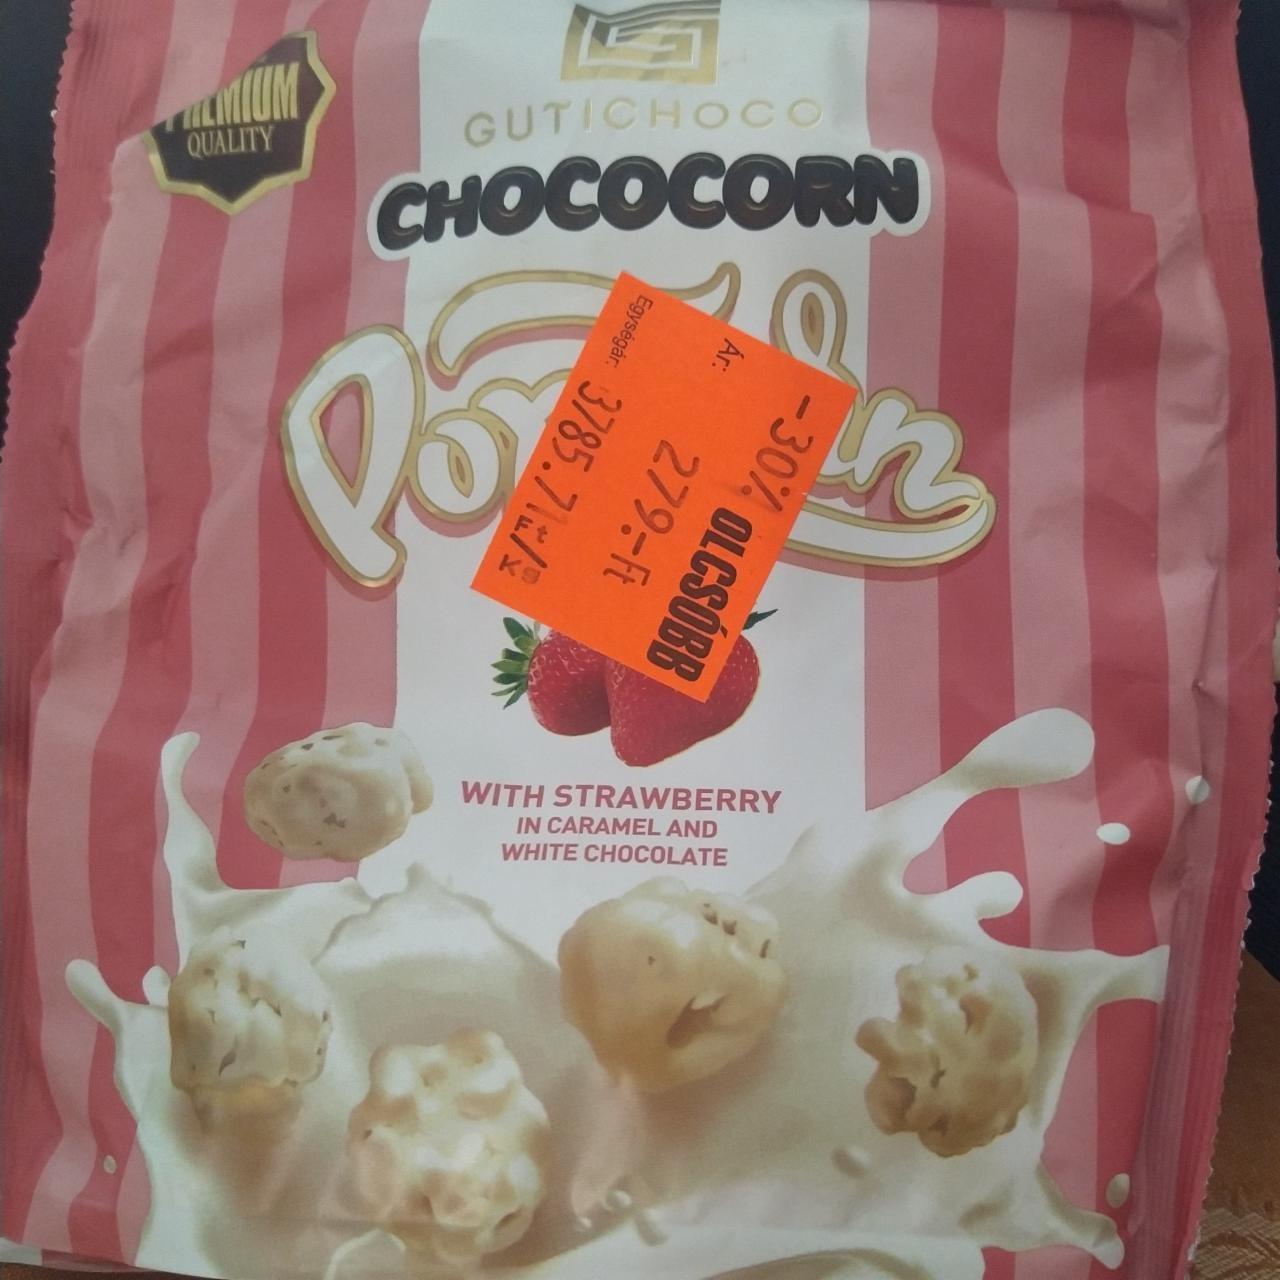 Képek - Chococorn with strawberry in caramel and white chocolate Gutichoco